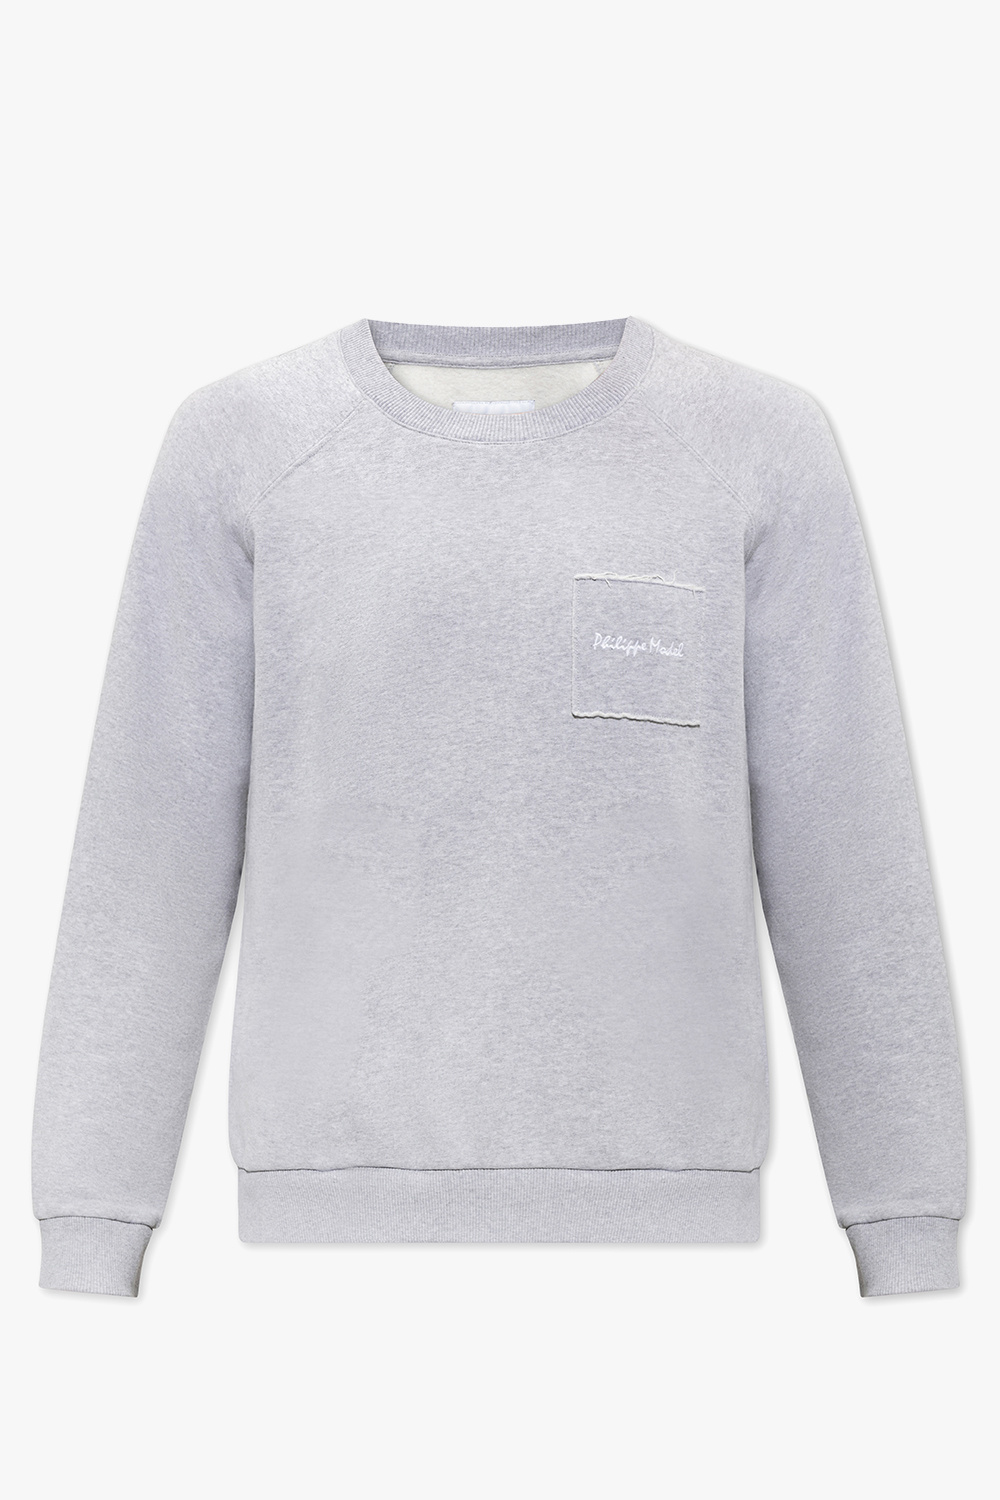 Philippe Model ‘Bernard’ sweatshirt